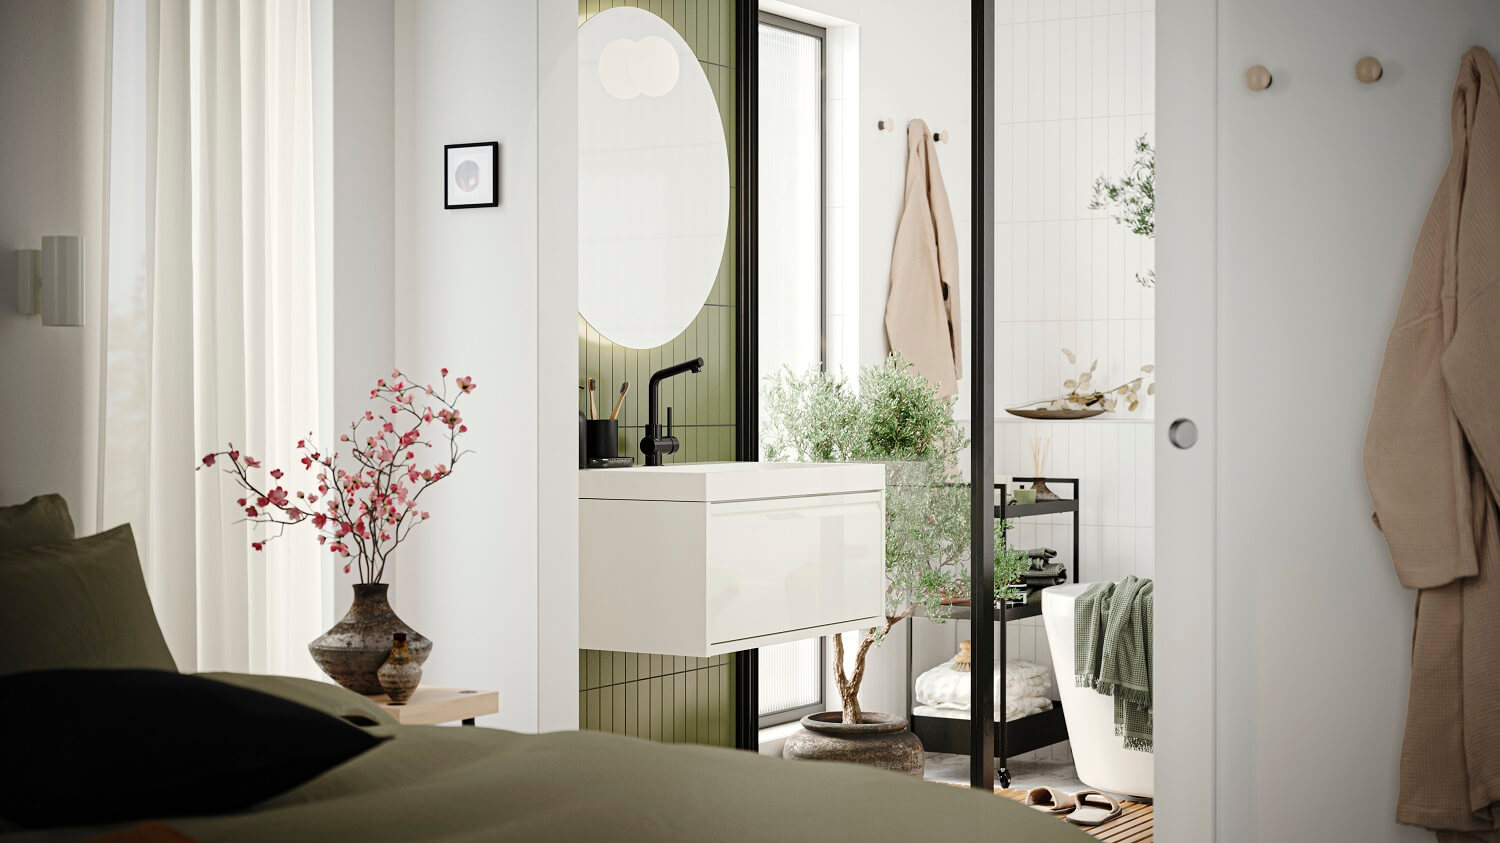 IKEA_ÄNGSJÖN_bathroom-en-suite-nordroom